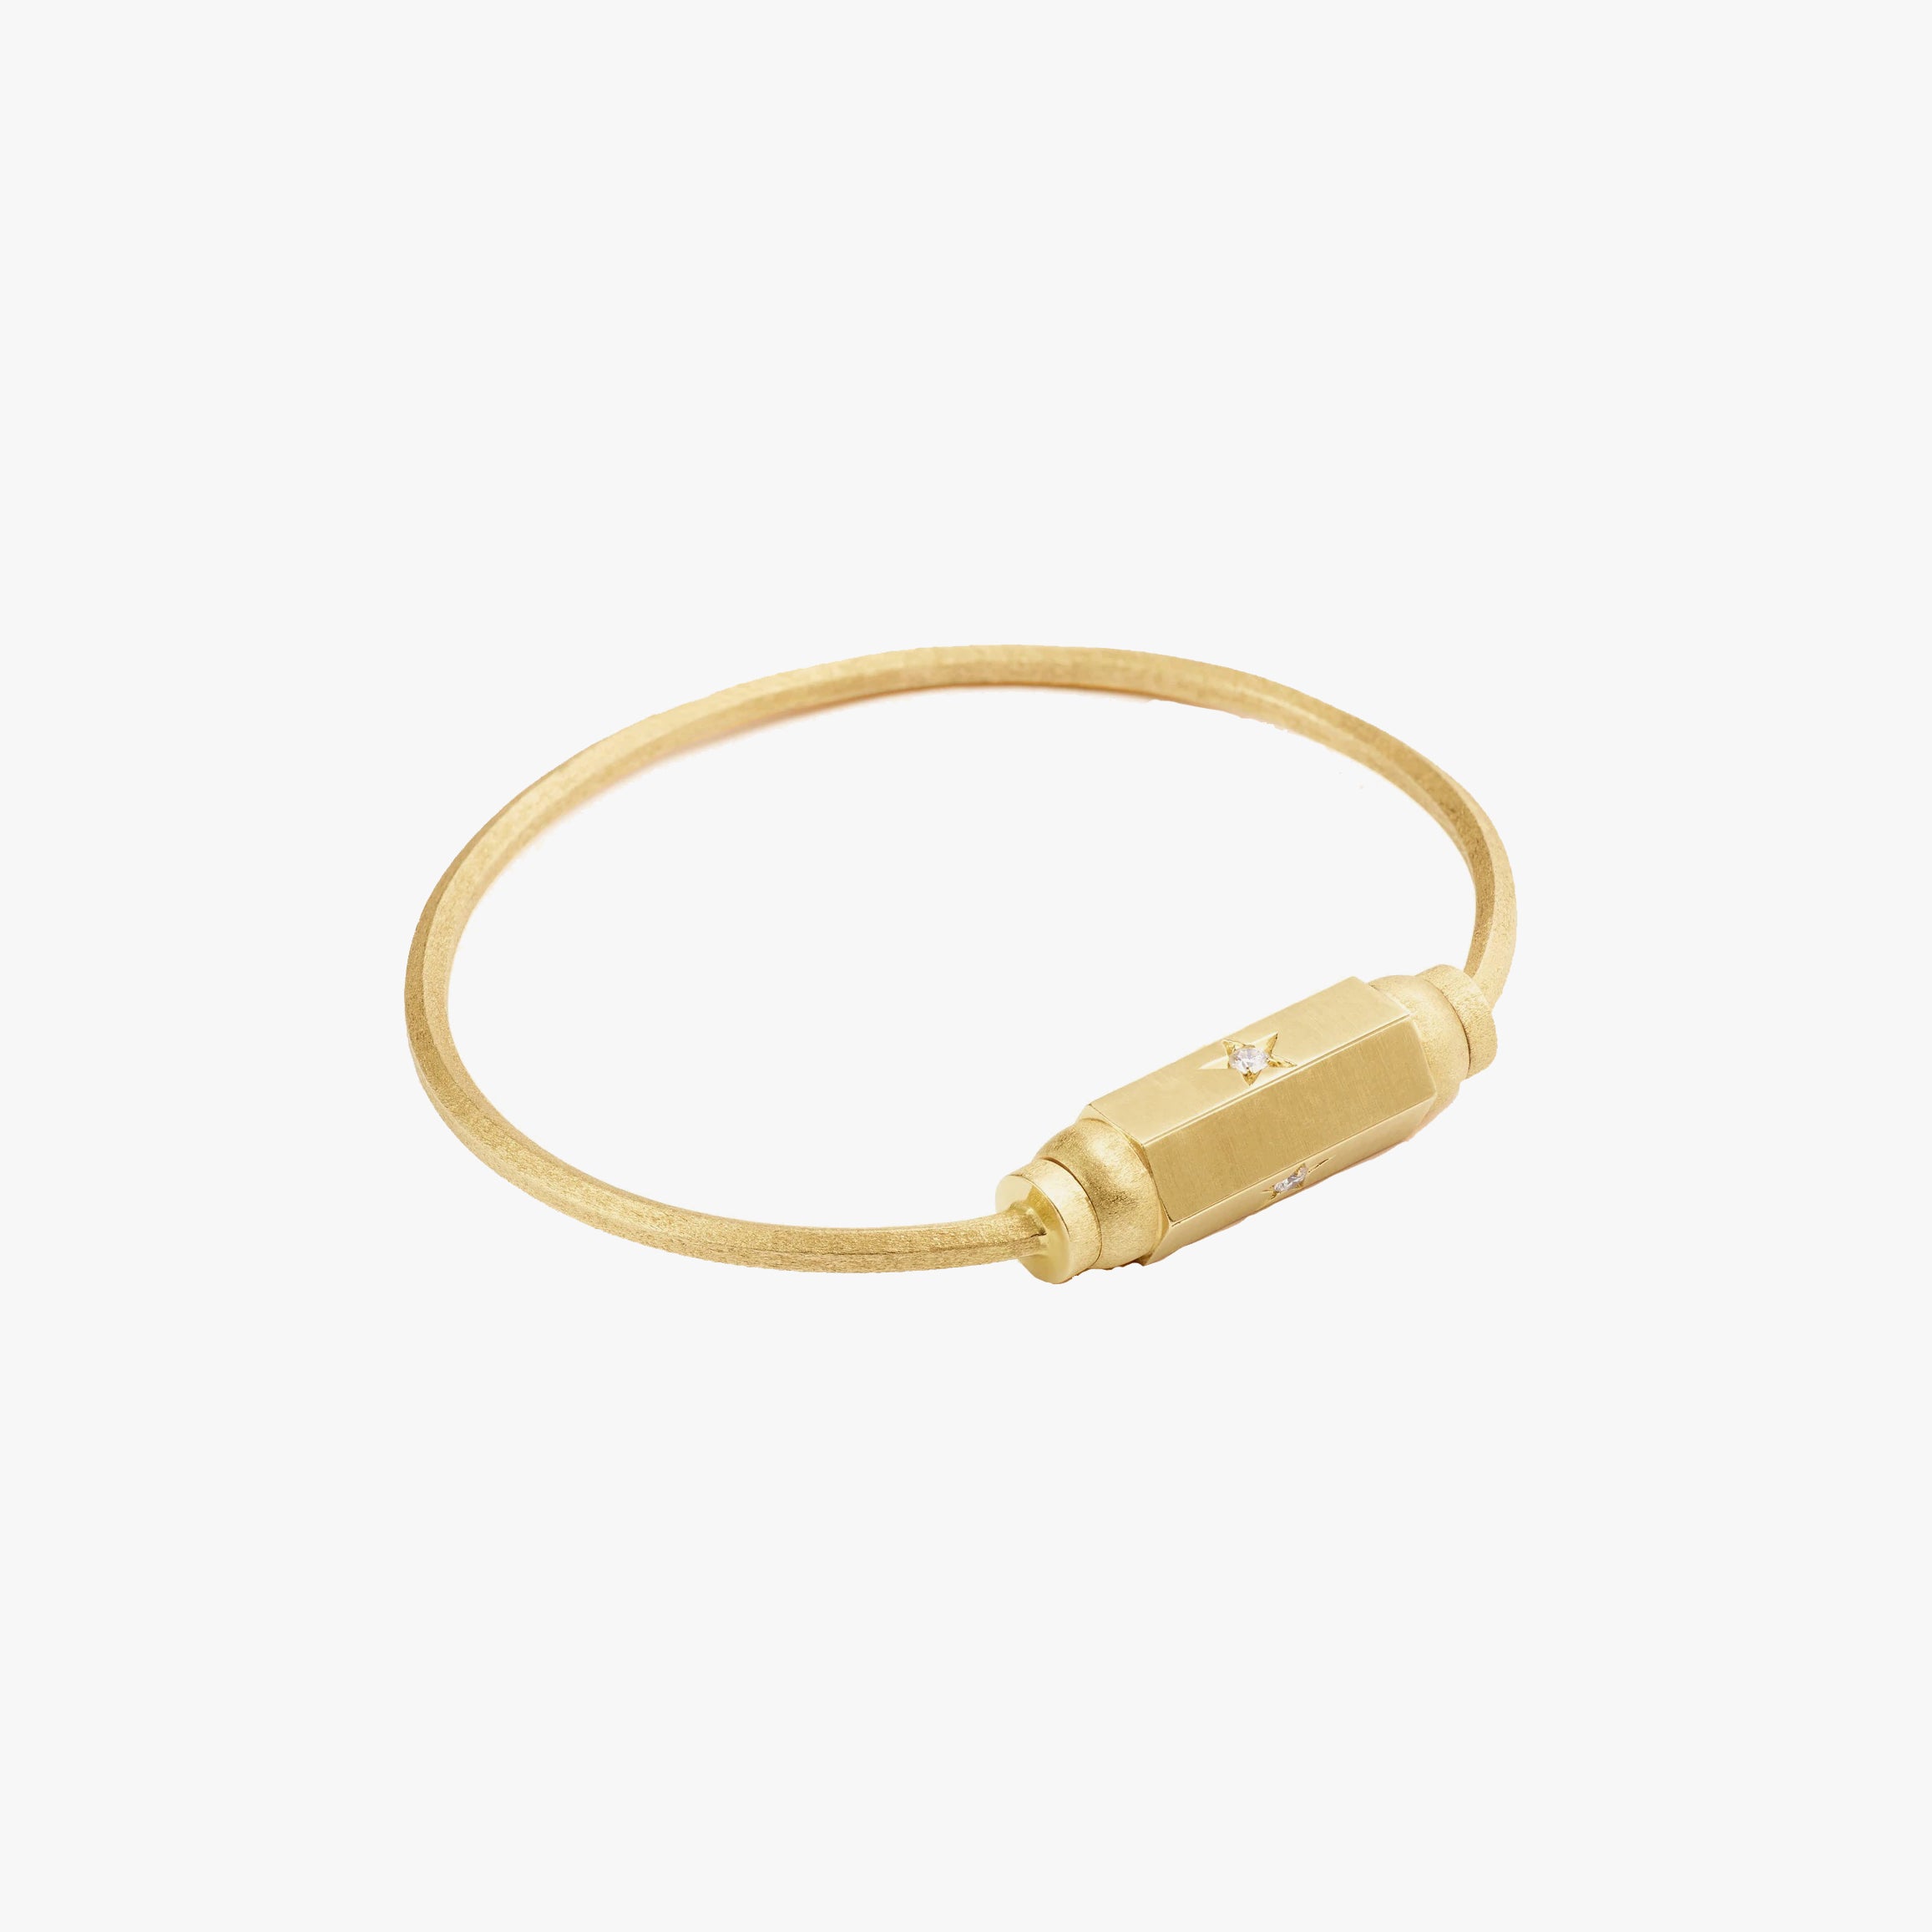 Baby coco 14k yellow gold bracelet with diamonds